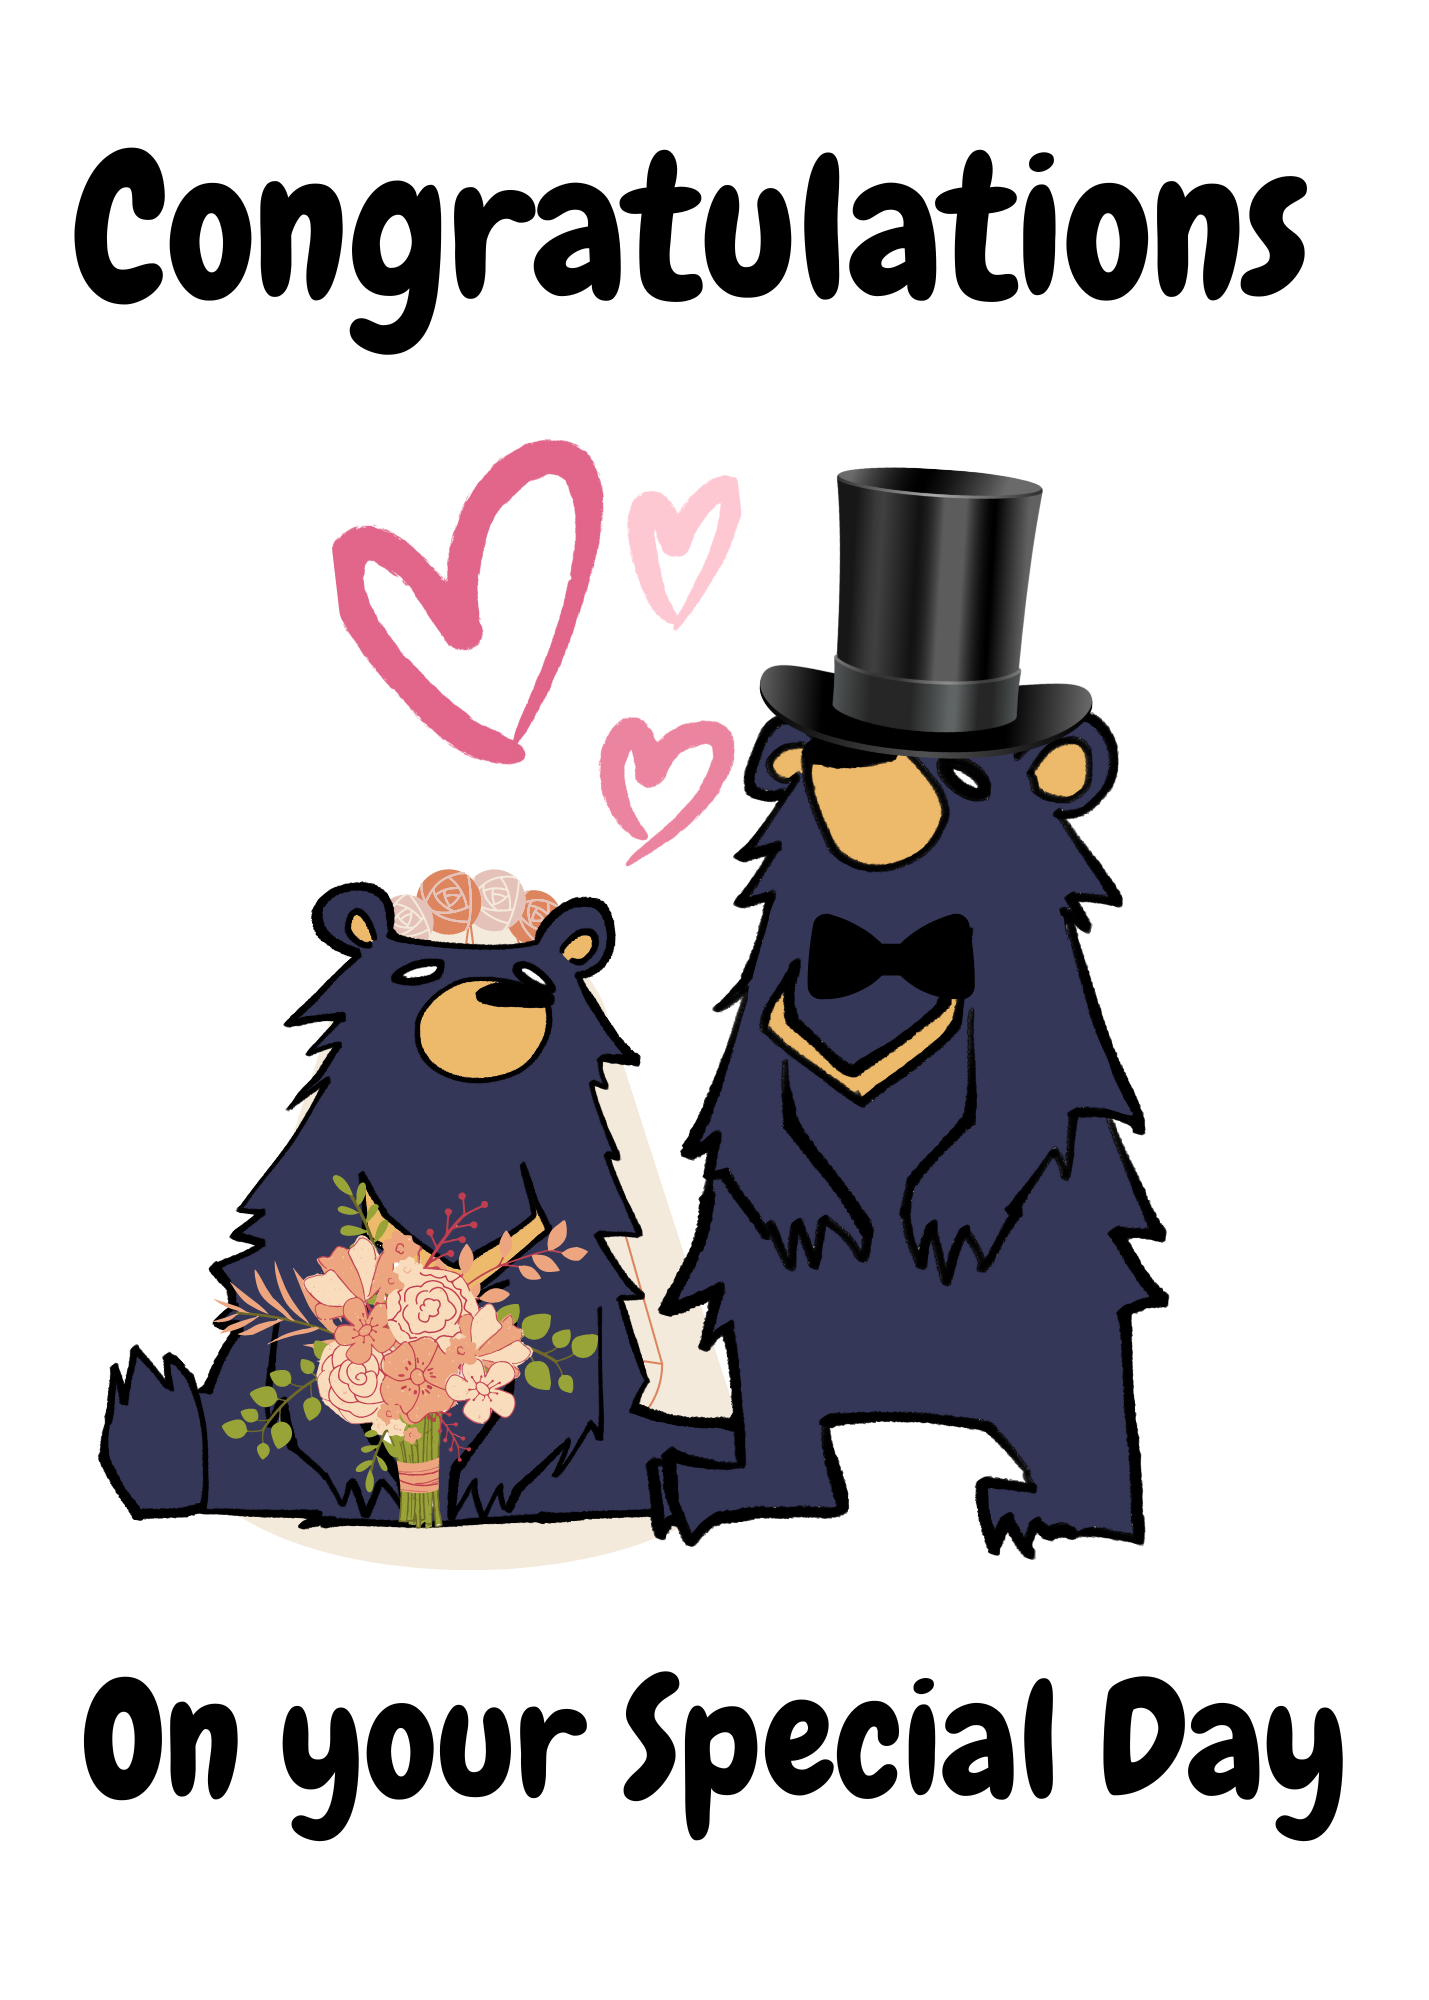 Wedding Congratulations Card featuring cute Moon Bears